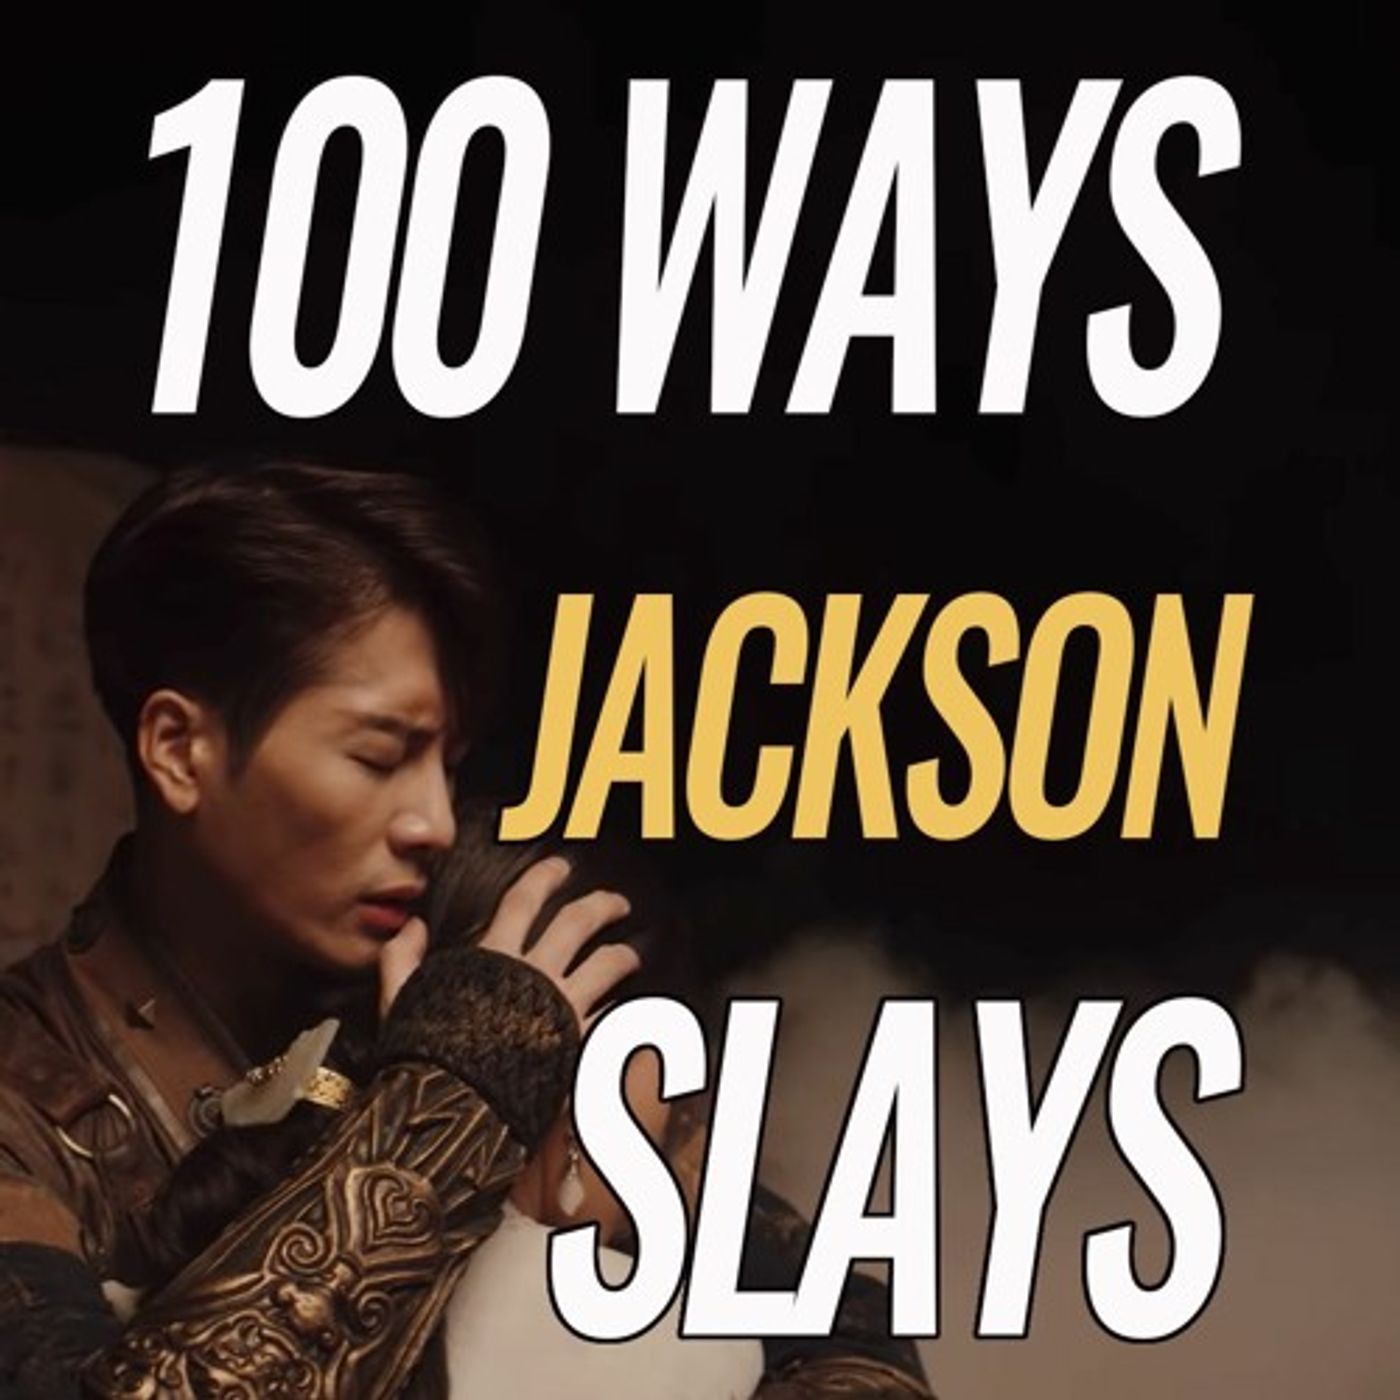 100 Ways Jackson Slays